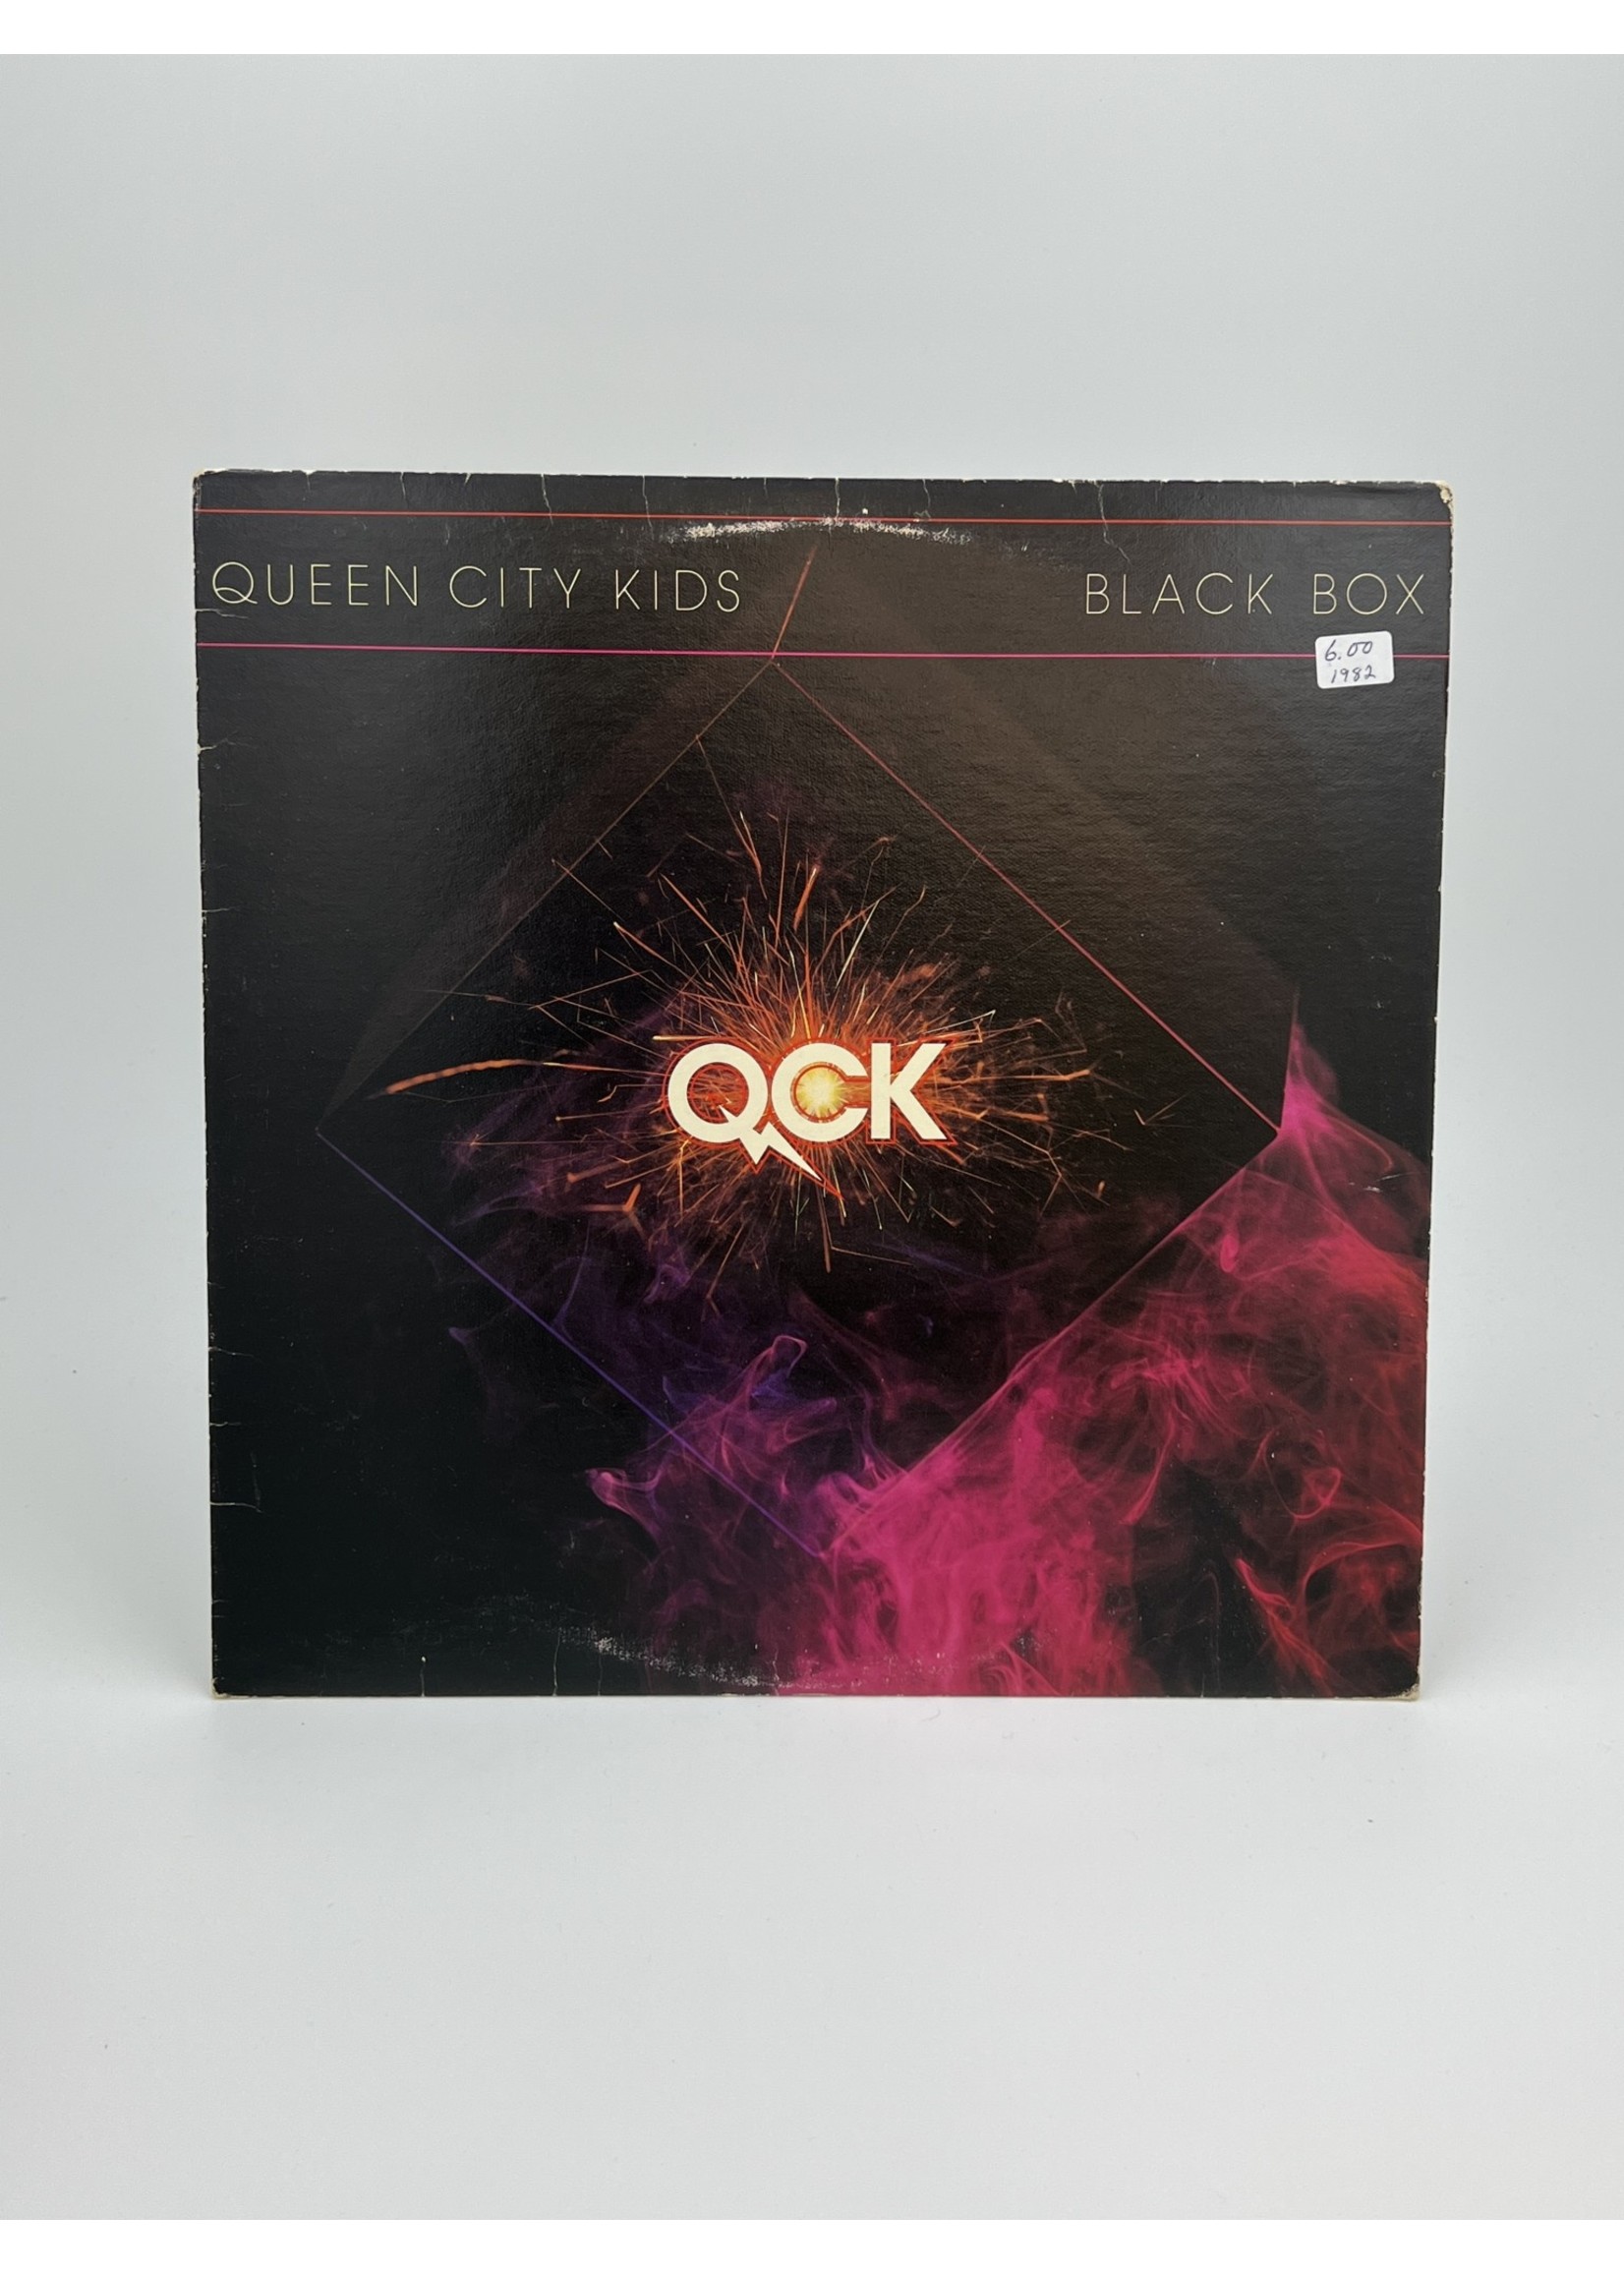 LP Queen City Kids Black Box LP Record